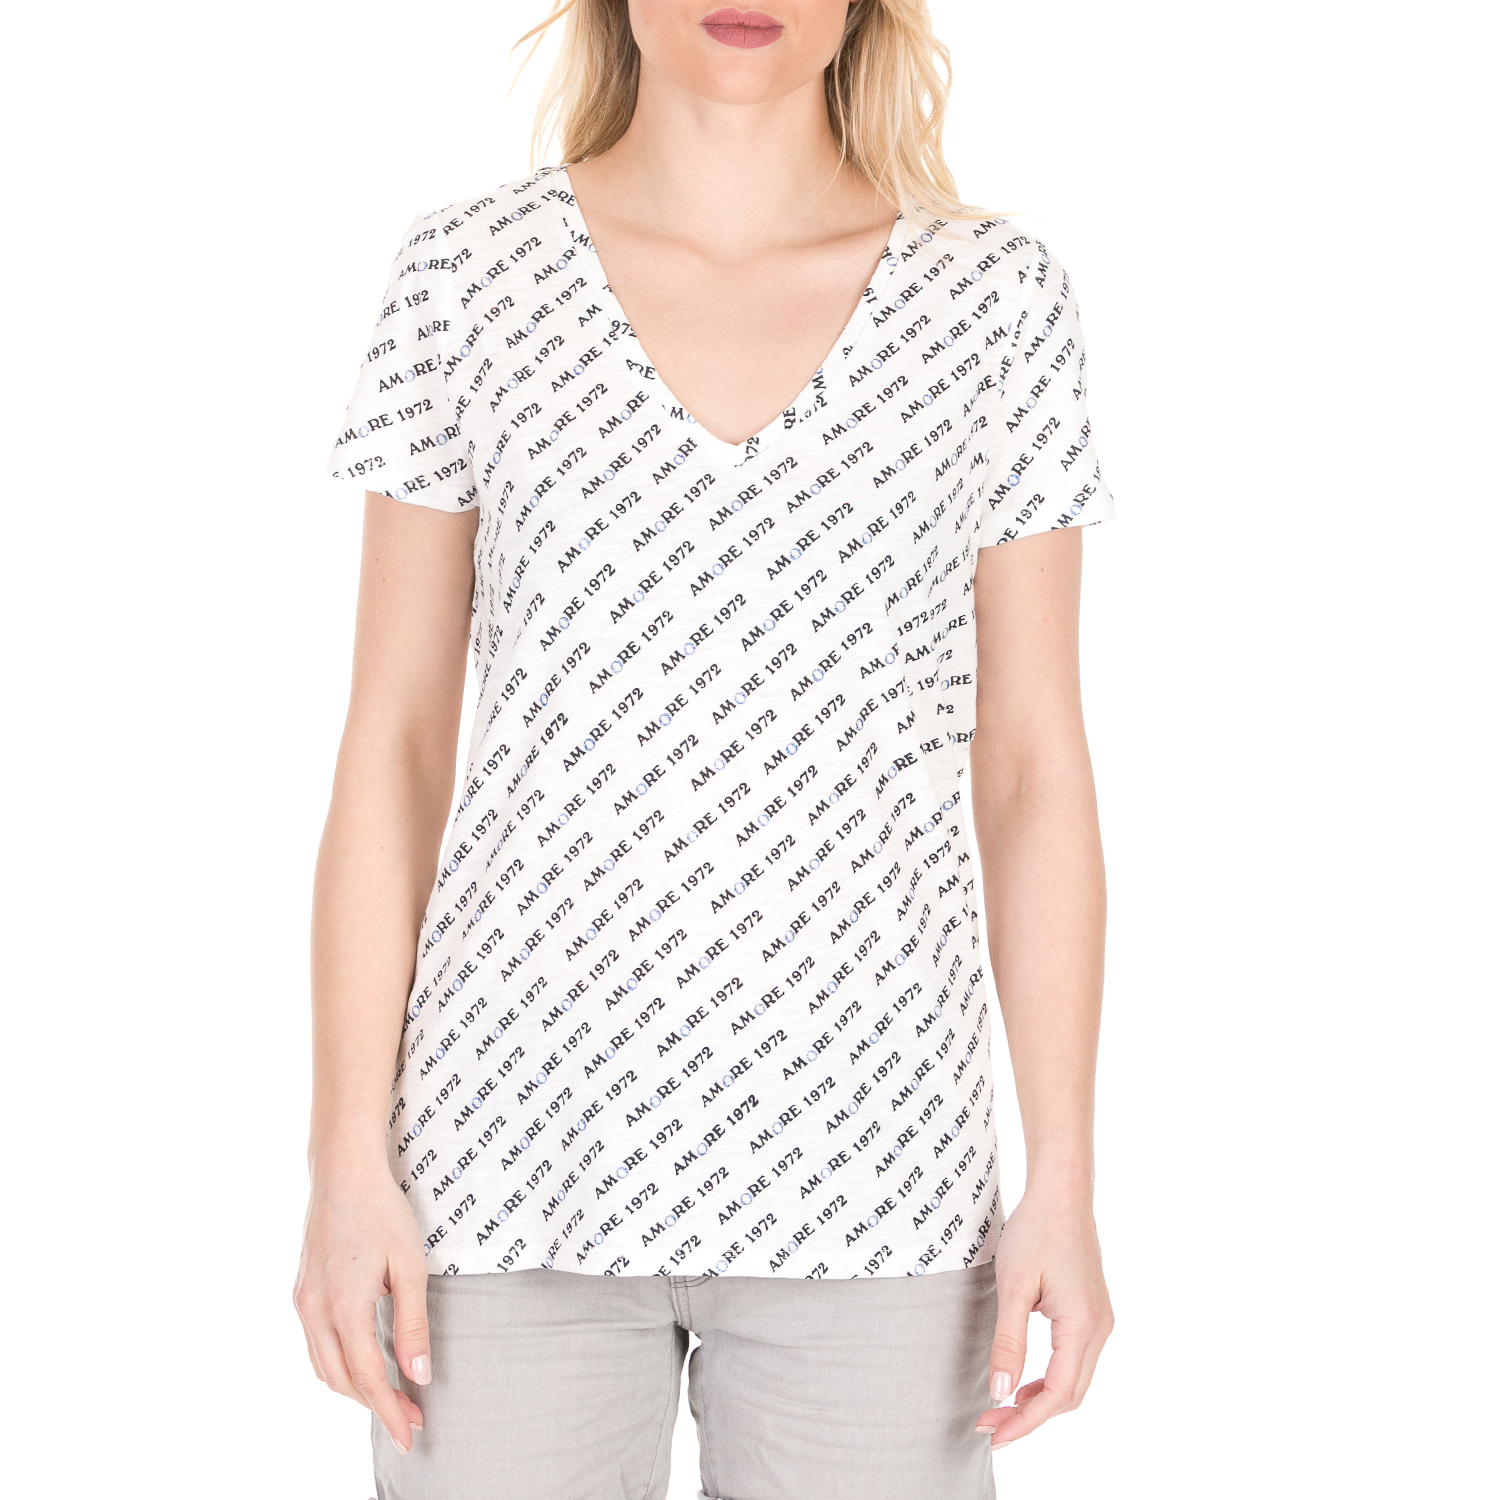 GARCIA JEANS - Γυναικείο t-shirt GARCIA JEANS ασπρόμαυρο Γυναικεία/Ρούχα/Μπλούζες/Κοντομάνικες